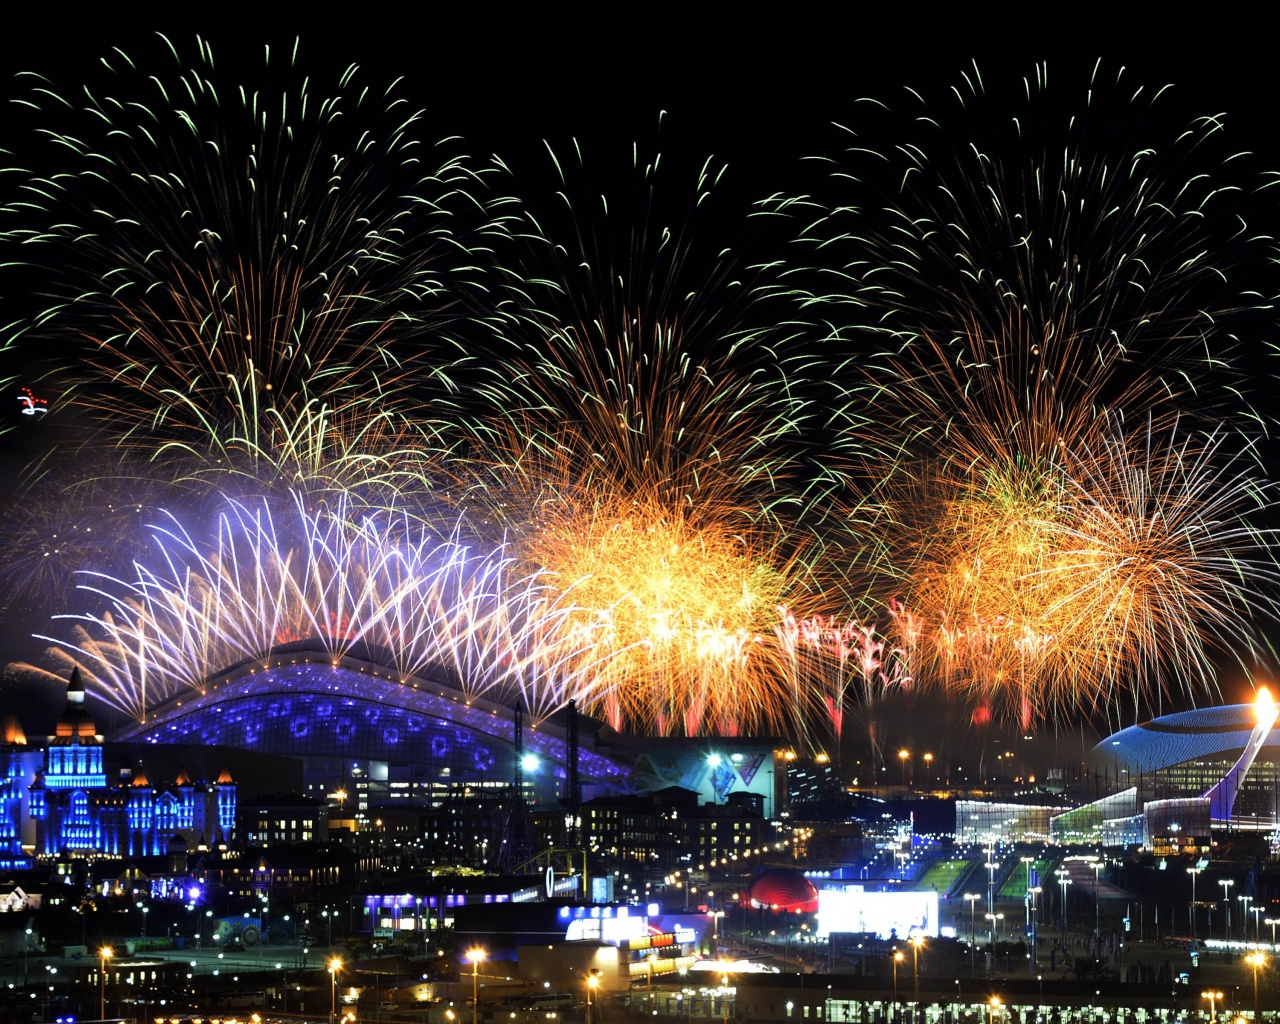 Fireworks Winter Olympics Sochi 2014